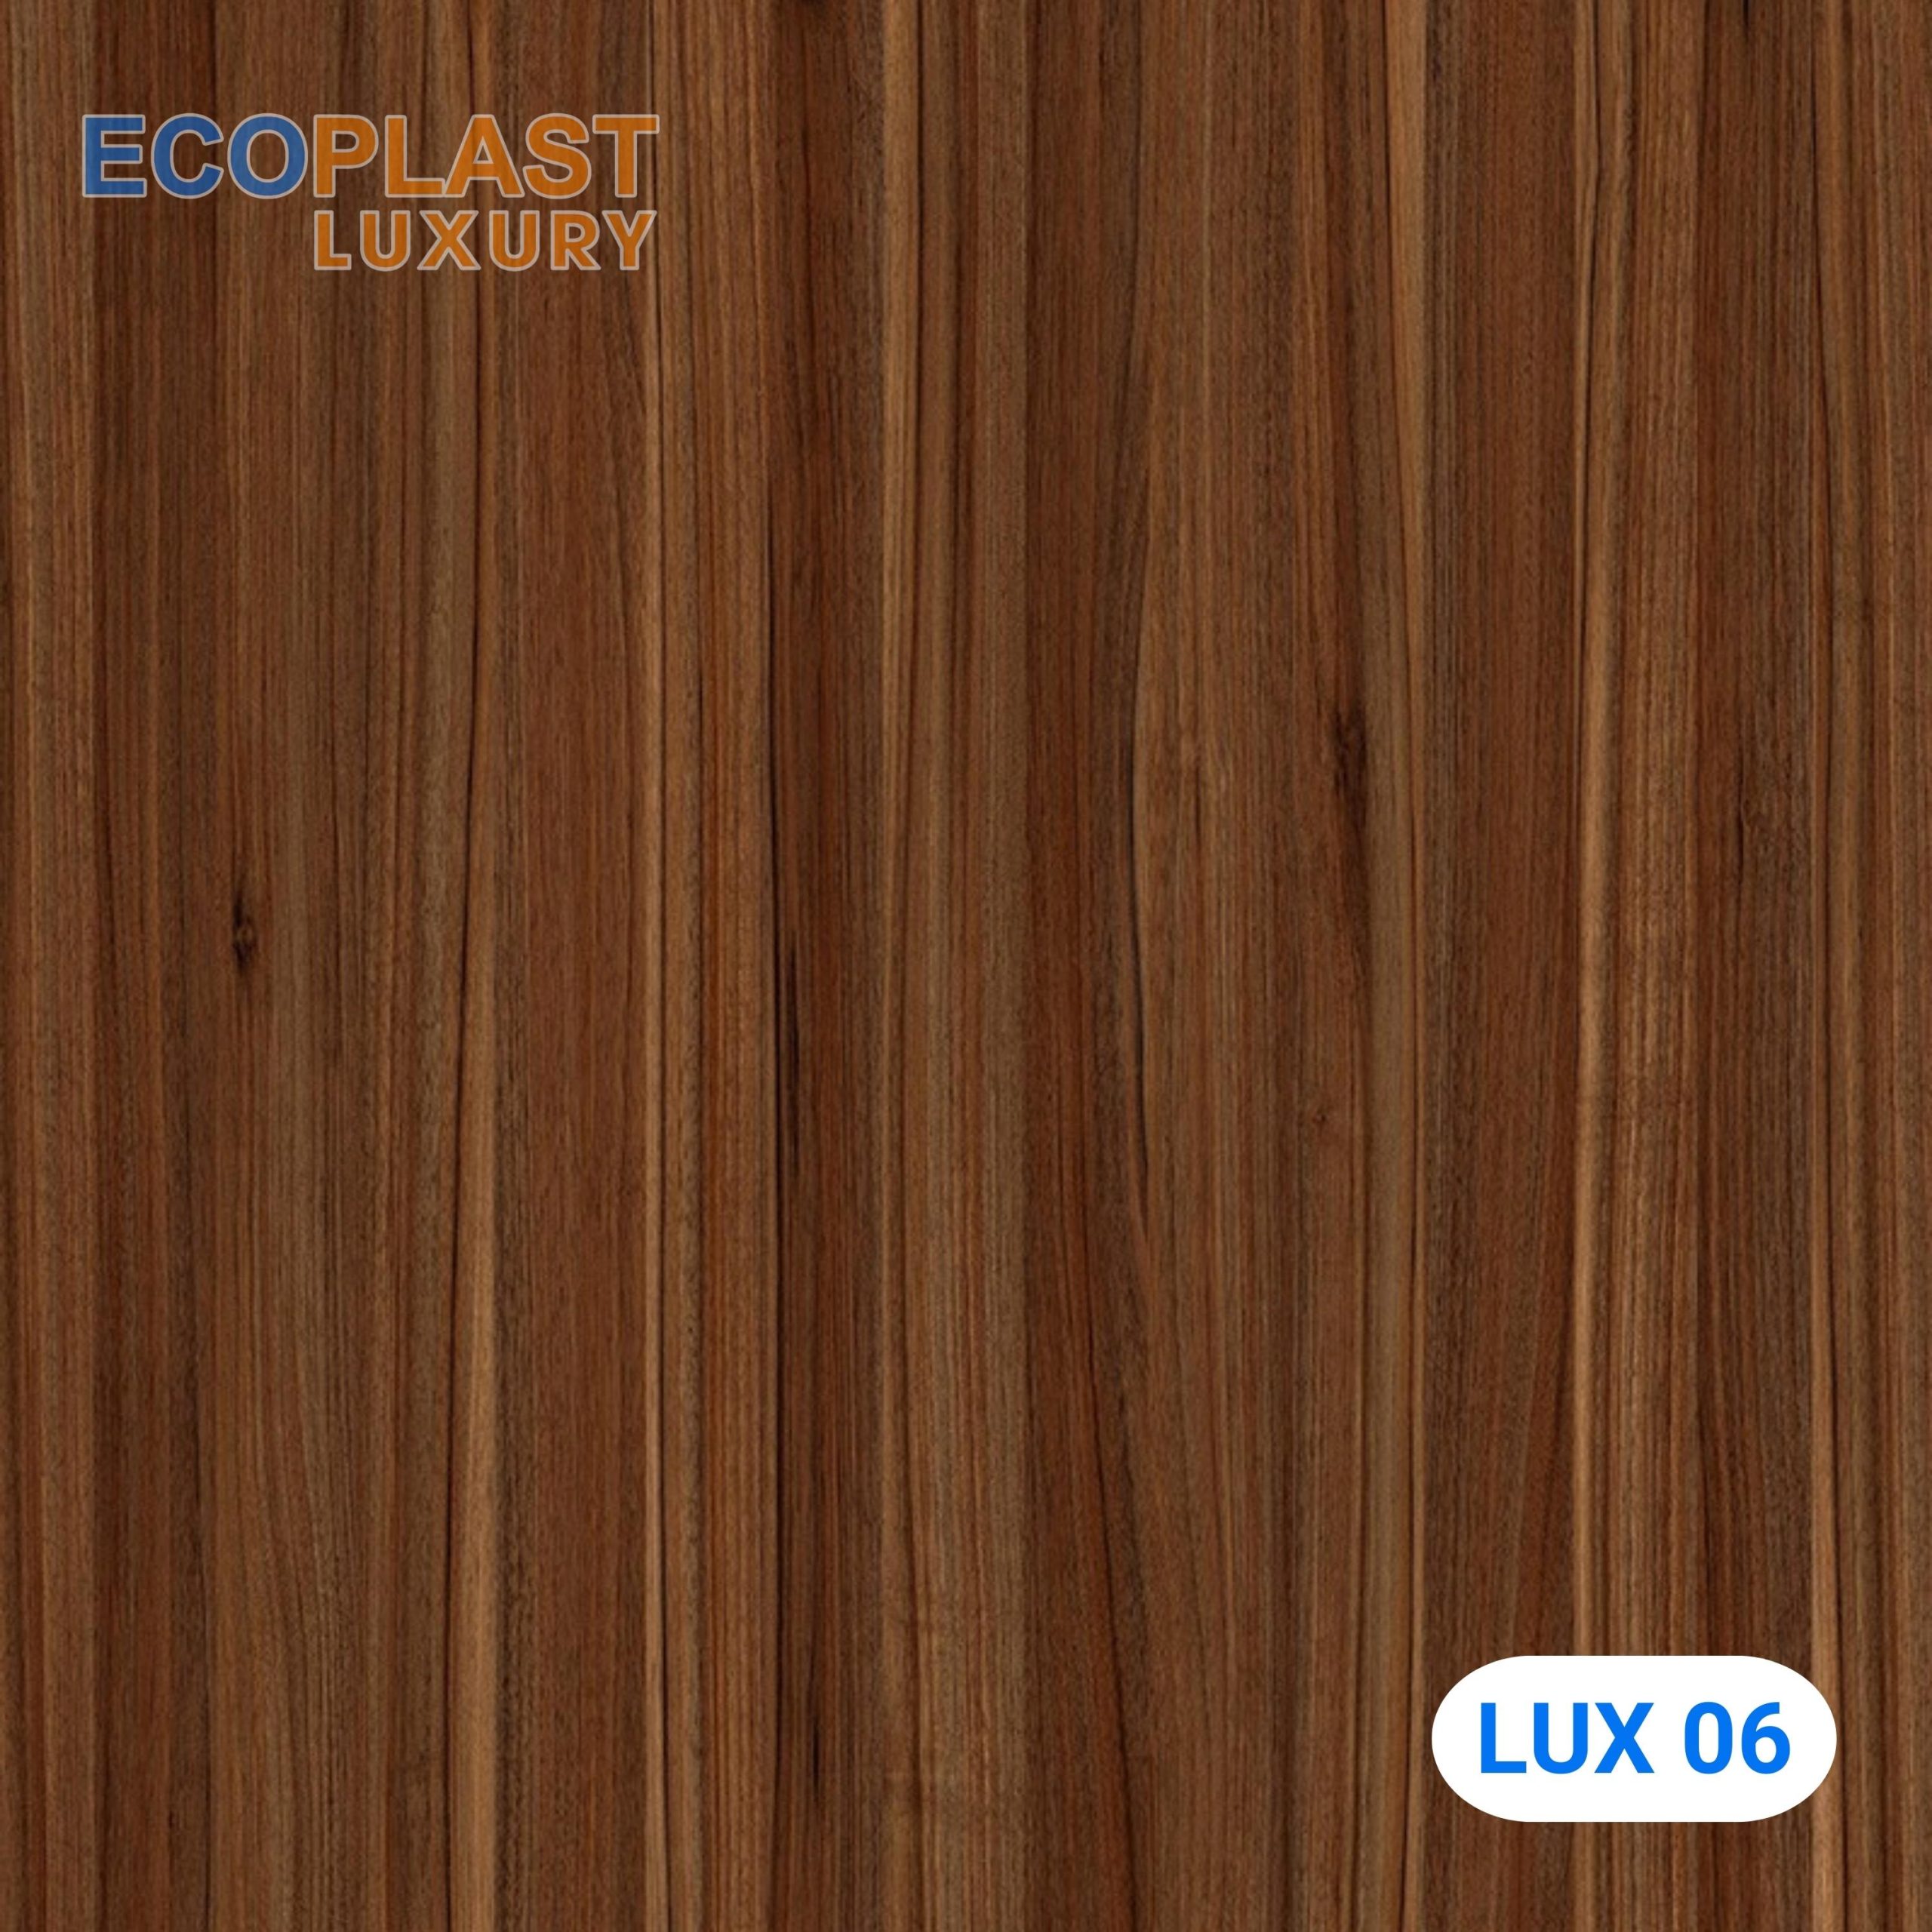 Mã màu tấm nhựa nội thất Ecoplast Lux 06